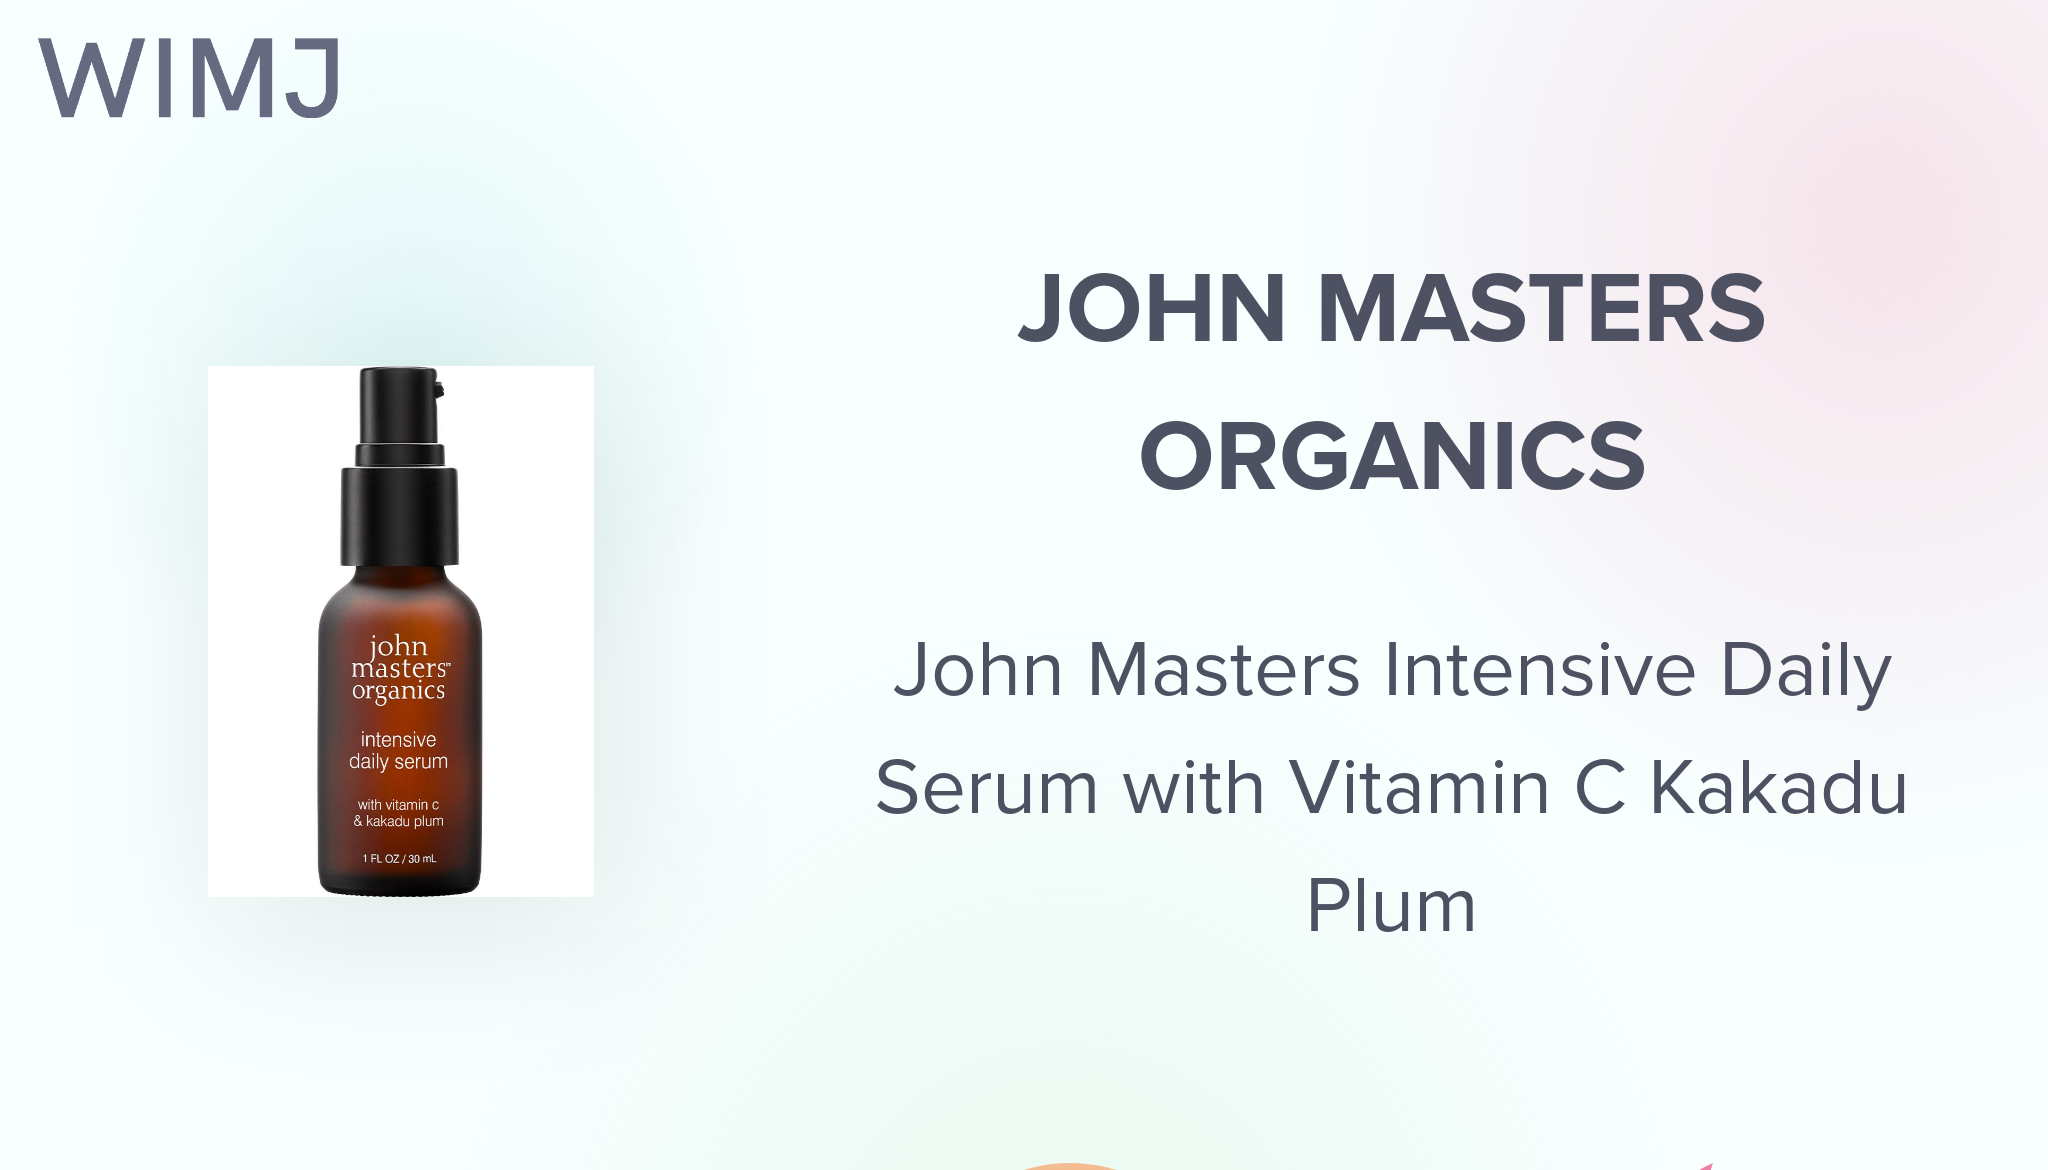 John Masters Organics John Masters Intensive Daily Serum with Vitamin C Kakadu Plum - WIMJ